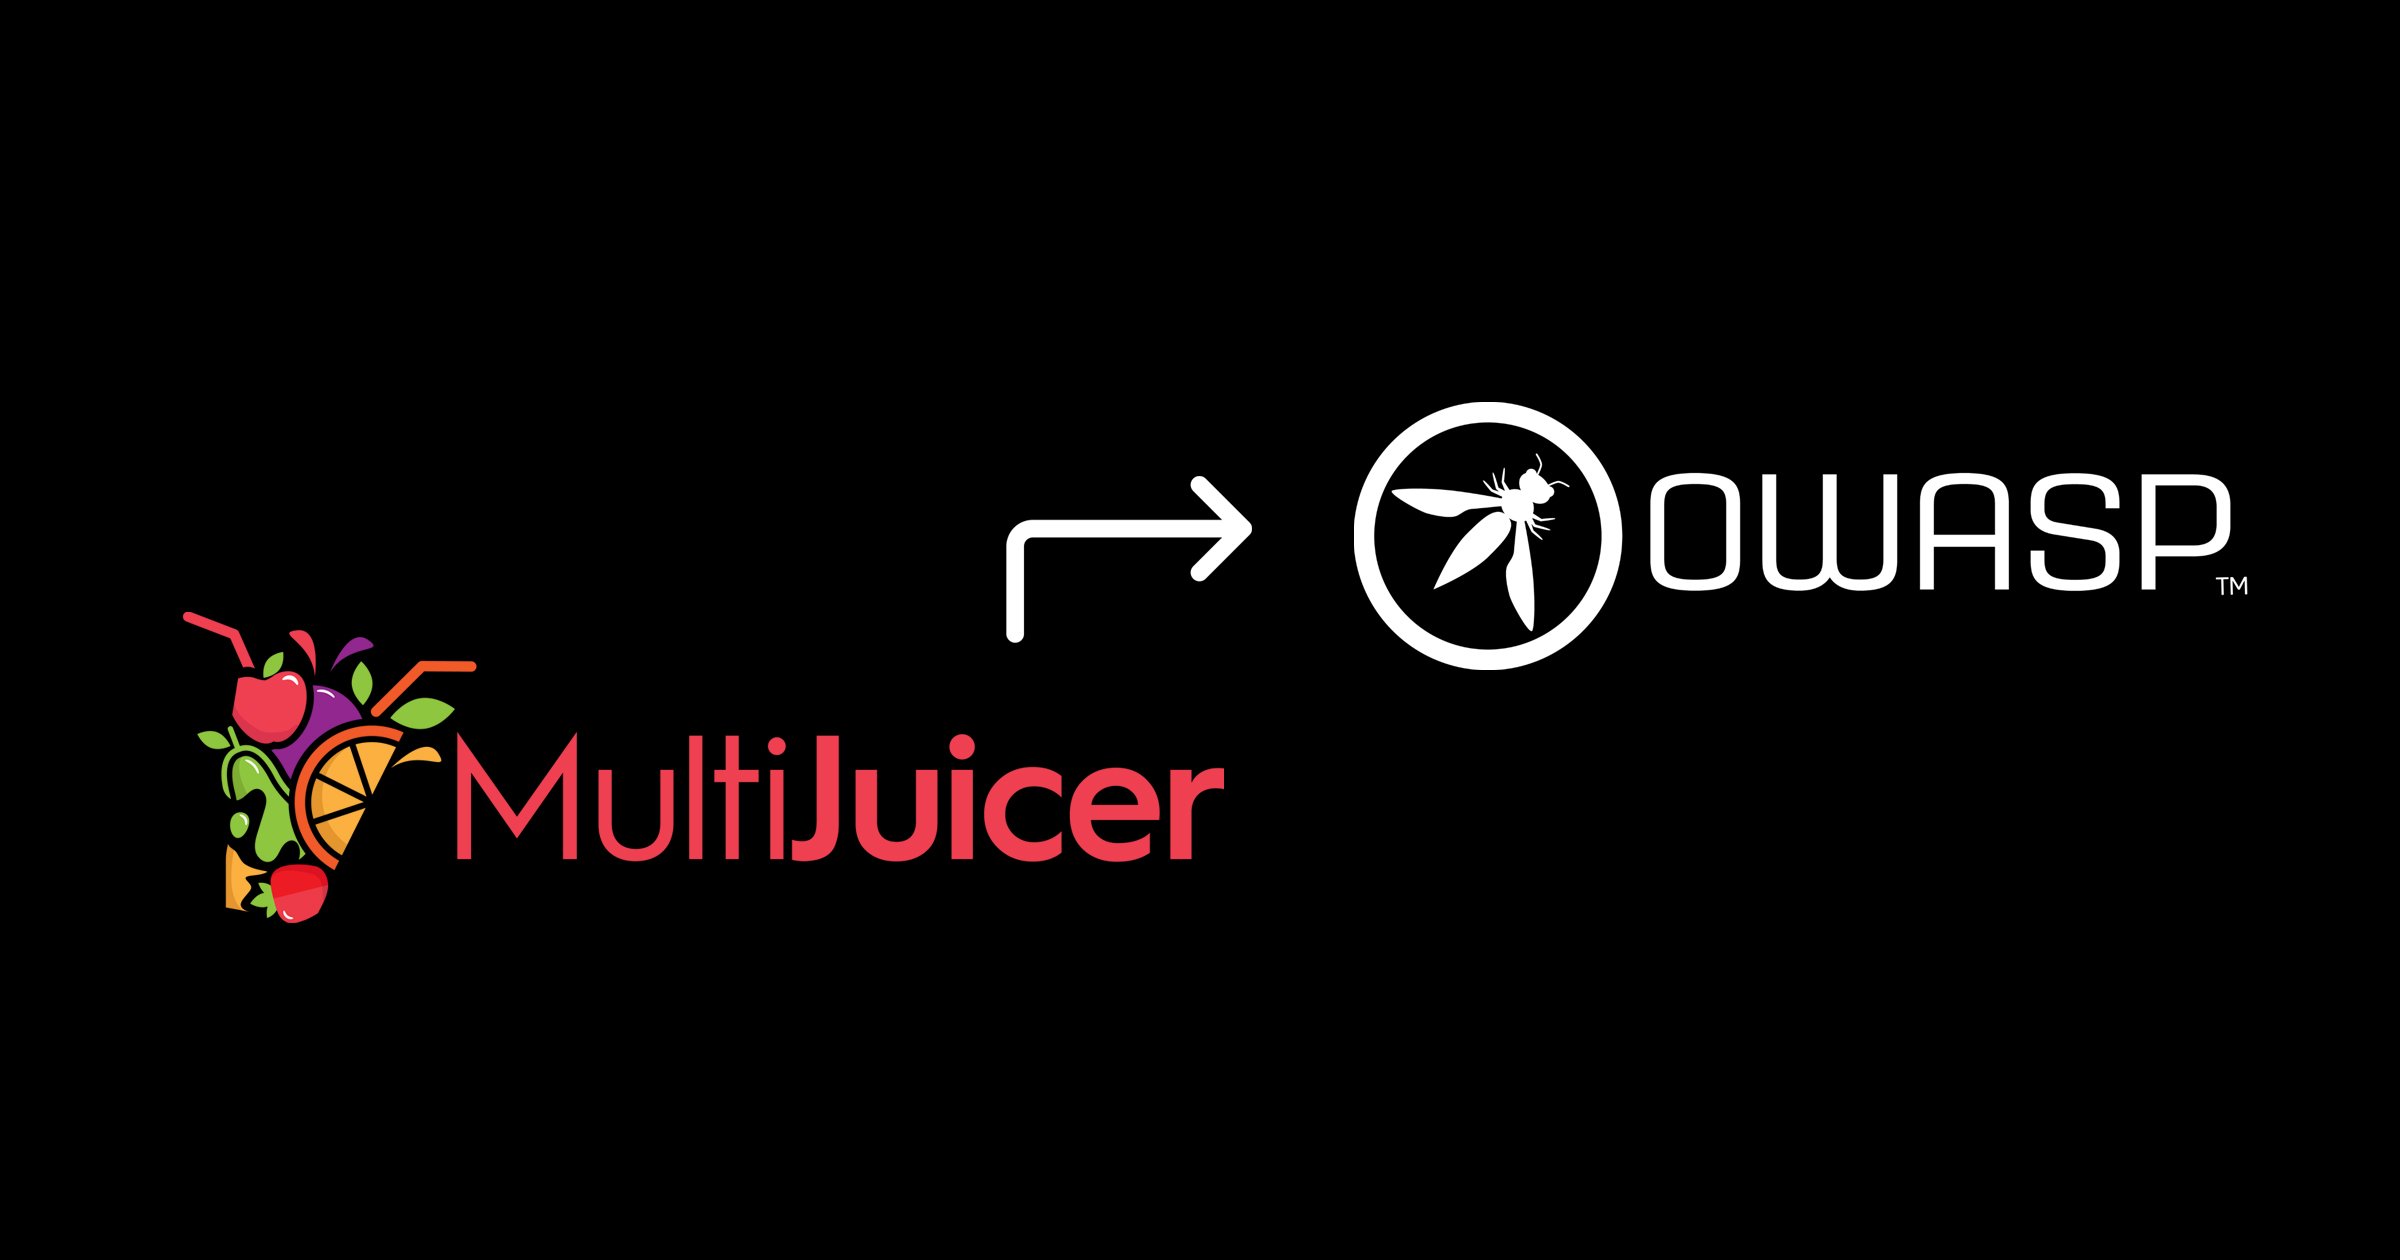 We donate MultiJuicer to OWASP